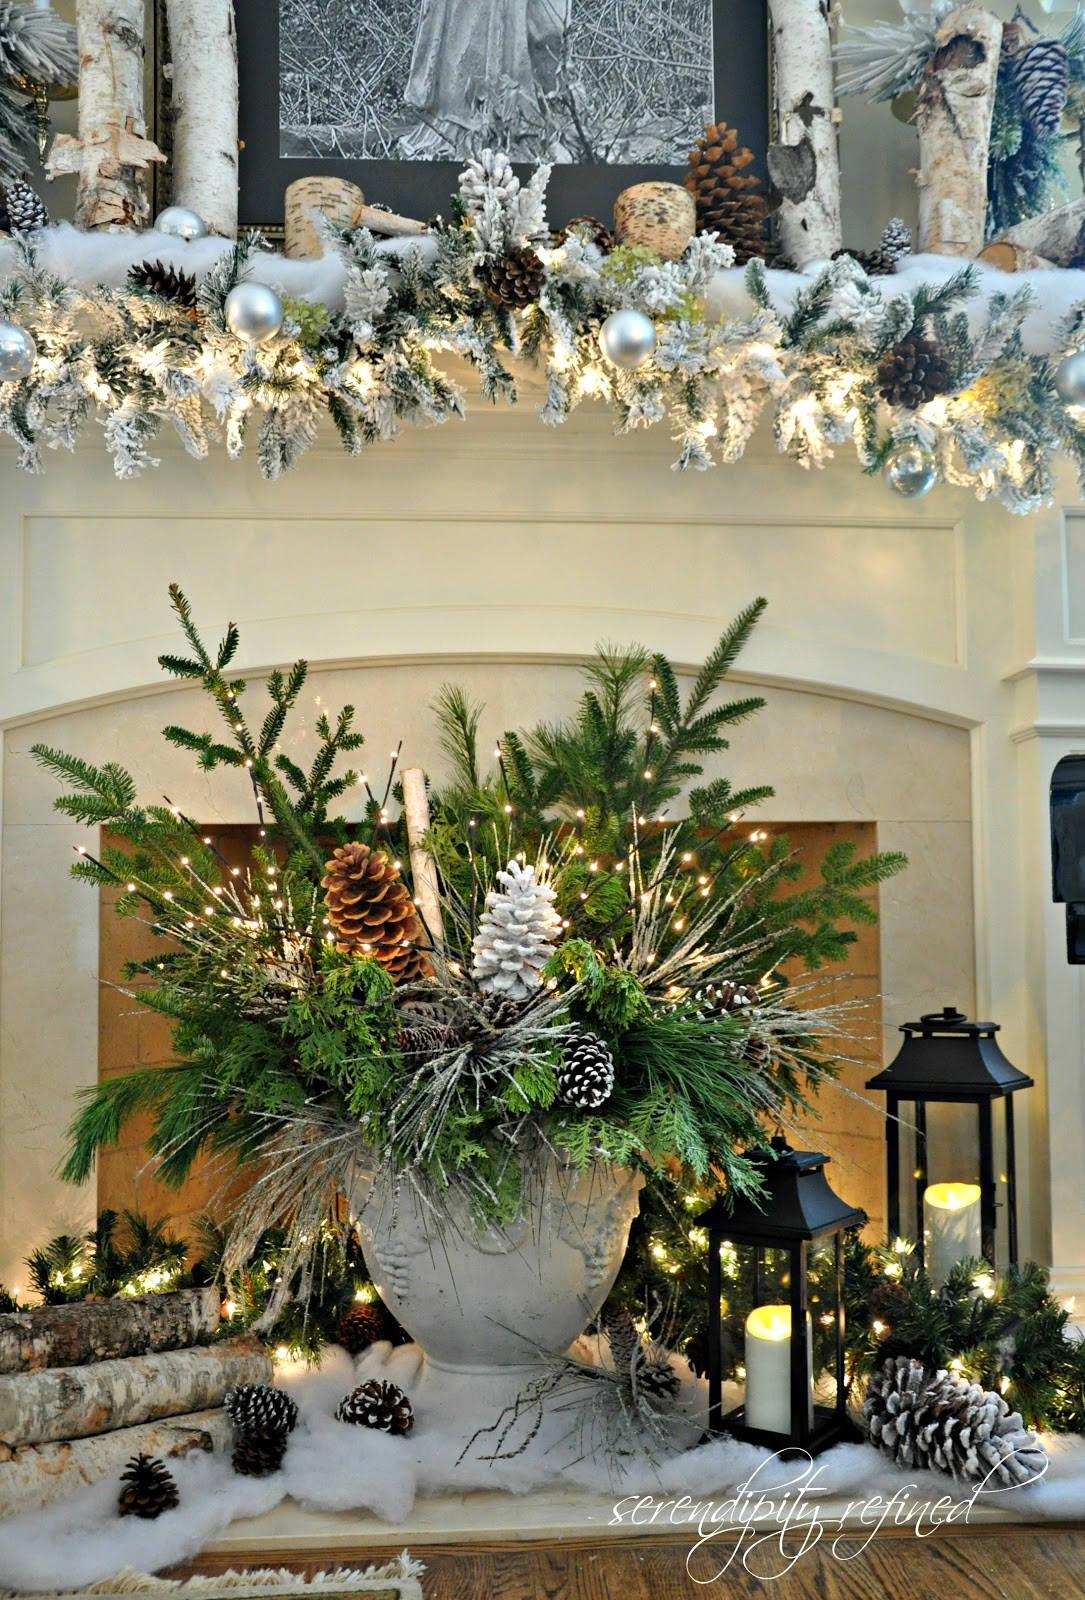 Pinterest Christmas Fireplace Decorations
 Serendipity Refined Blog Woodland Winter Mantel d NFL